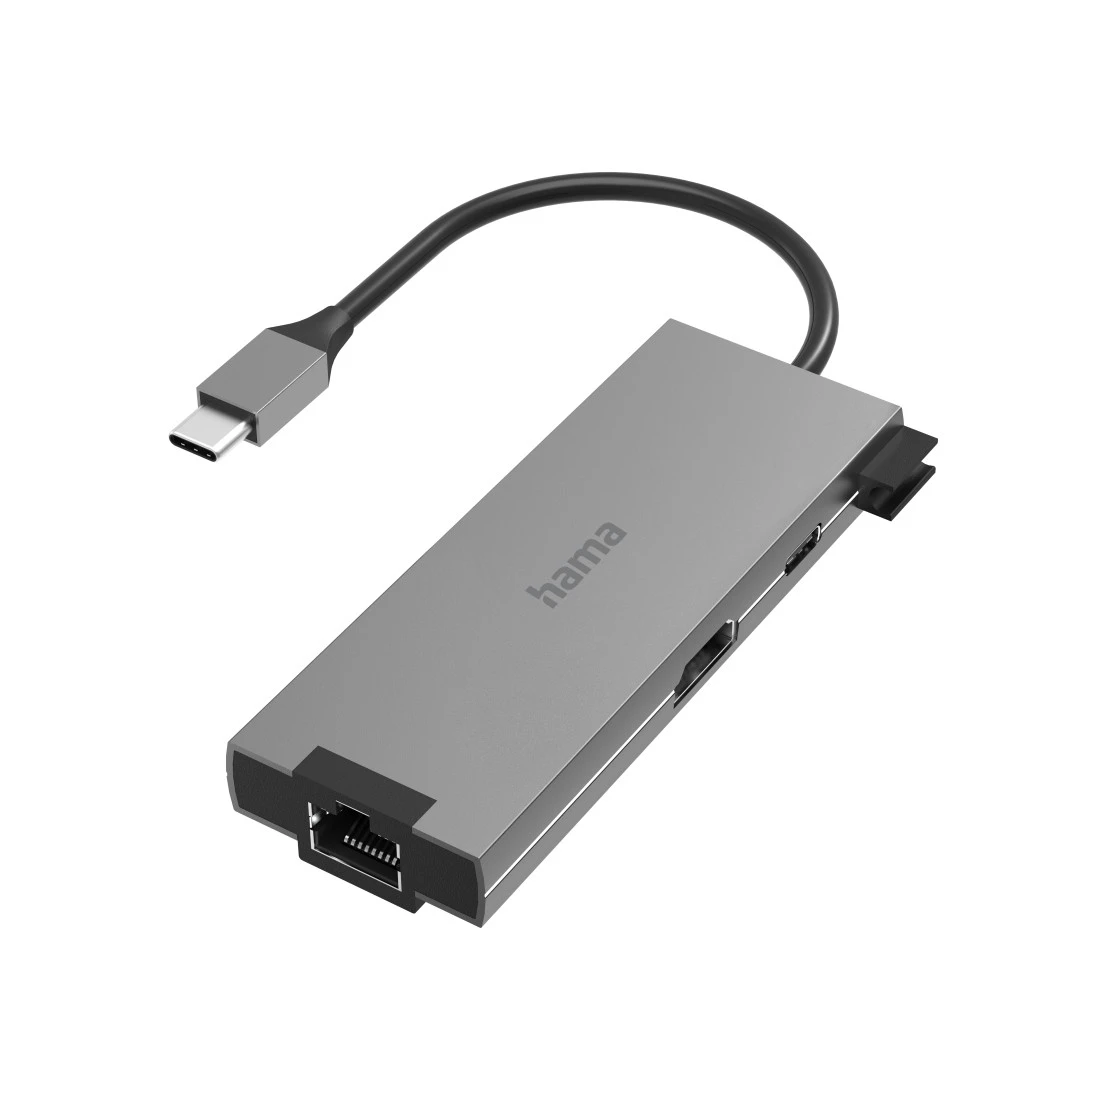 Hub USB-C, multiport, 5 ports, 2 USB-A, USB-C, HDMI™, LAN/Ether.